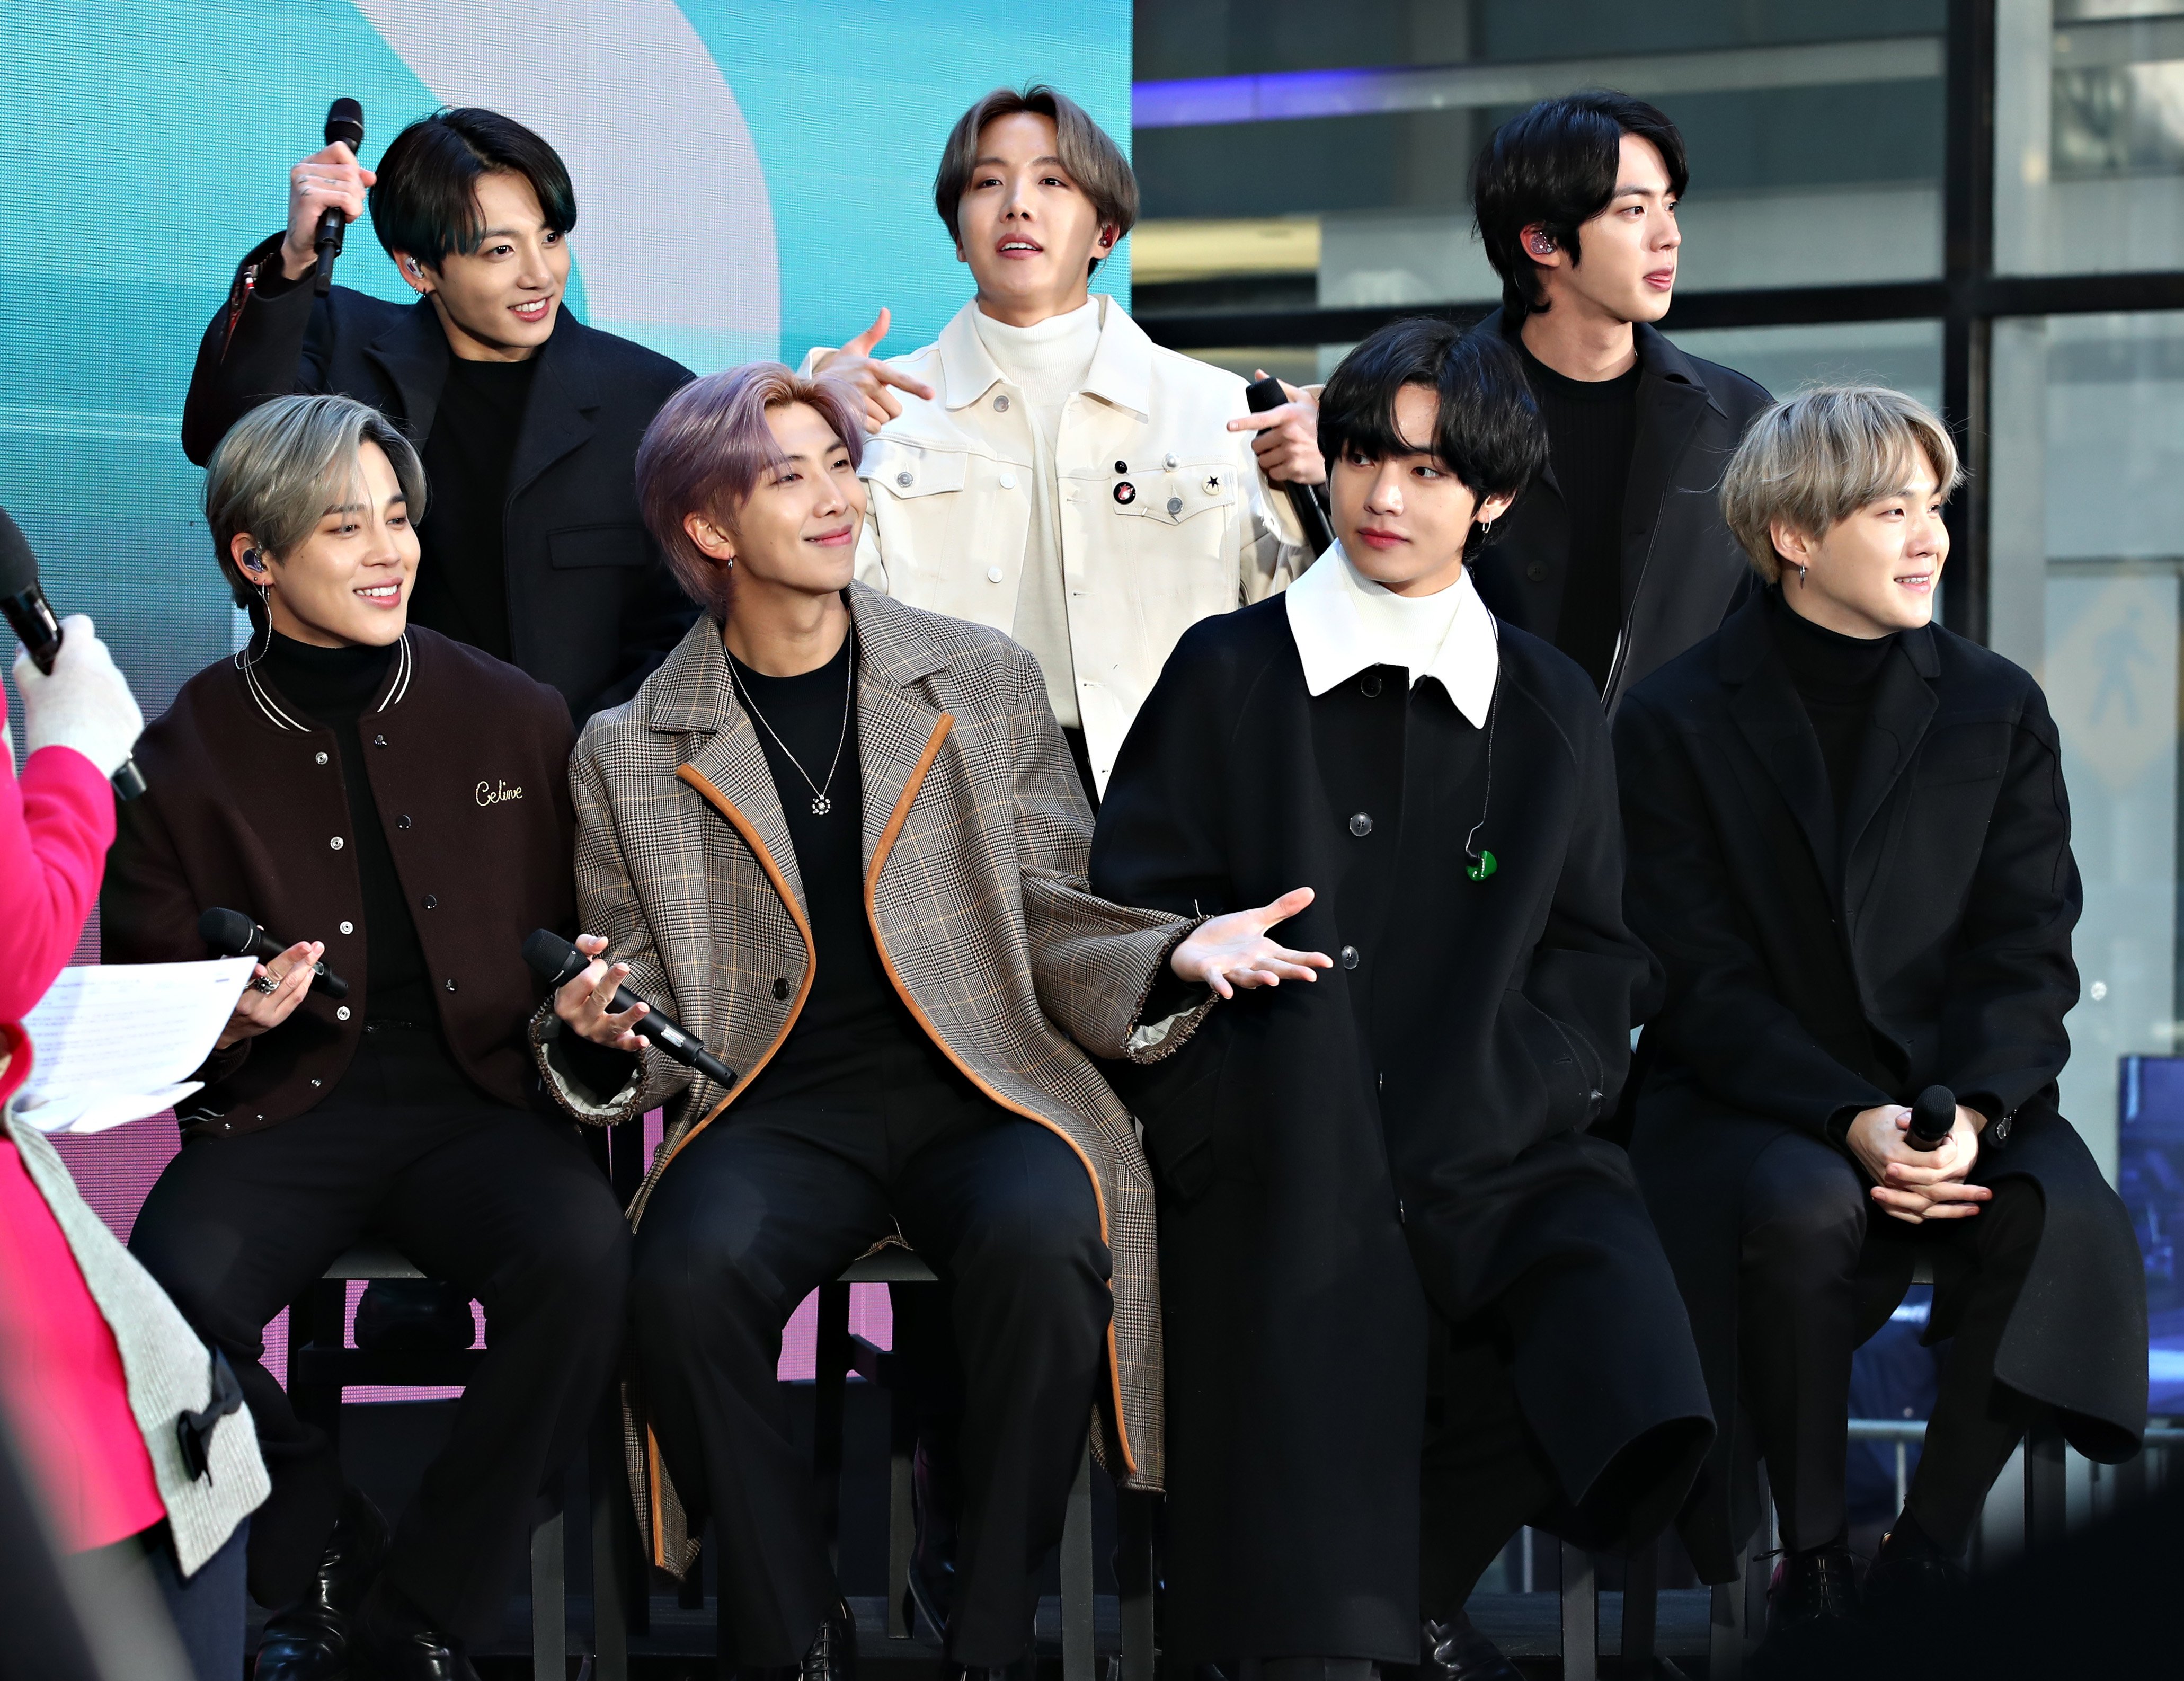 Jimin, Jungkook, RM, J-Hope, V, Jin, and Suga of the K-pop boy band BTS sitting together on stage in winter coats